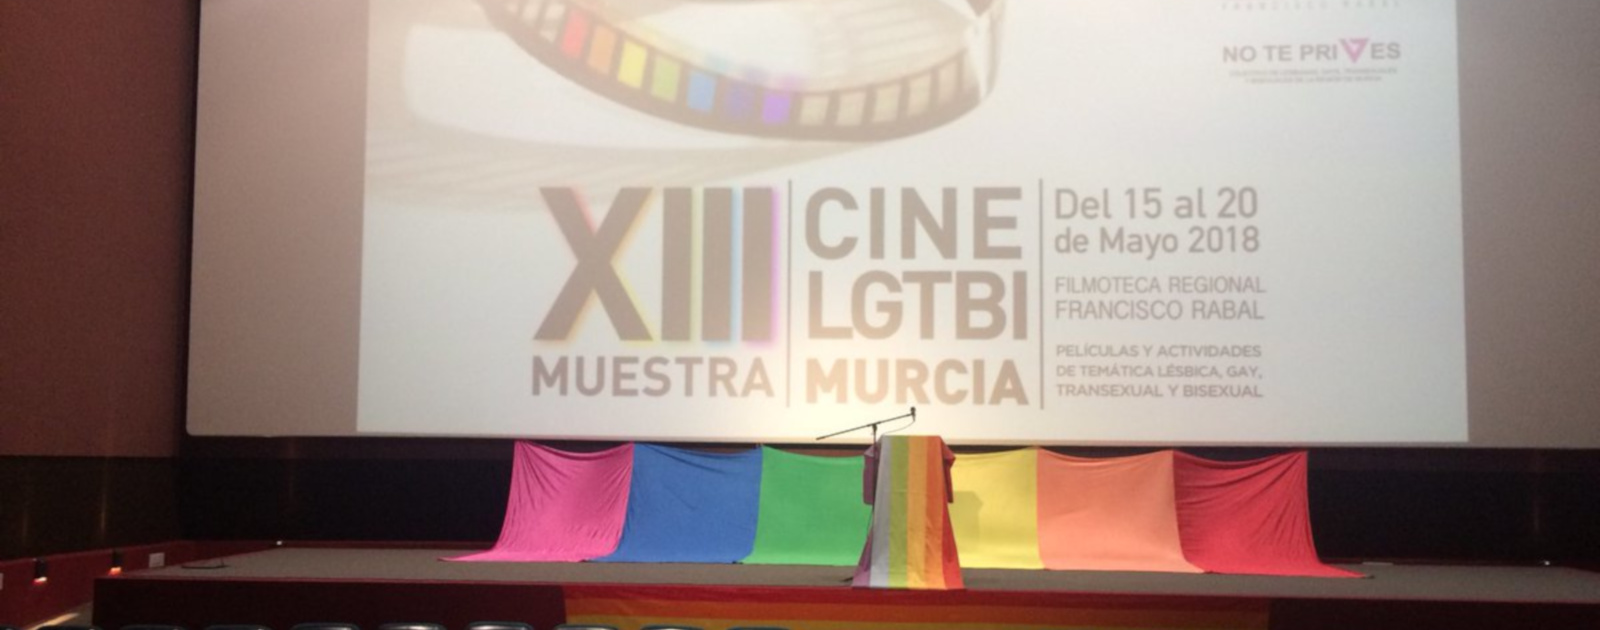 Muestra de Cine LGTBI en Murcia